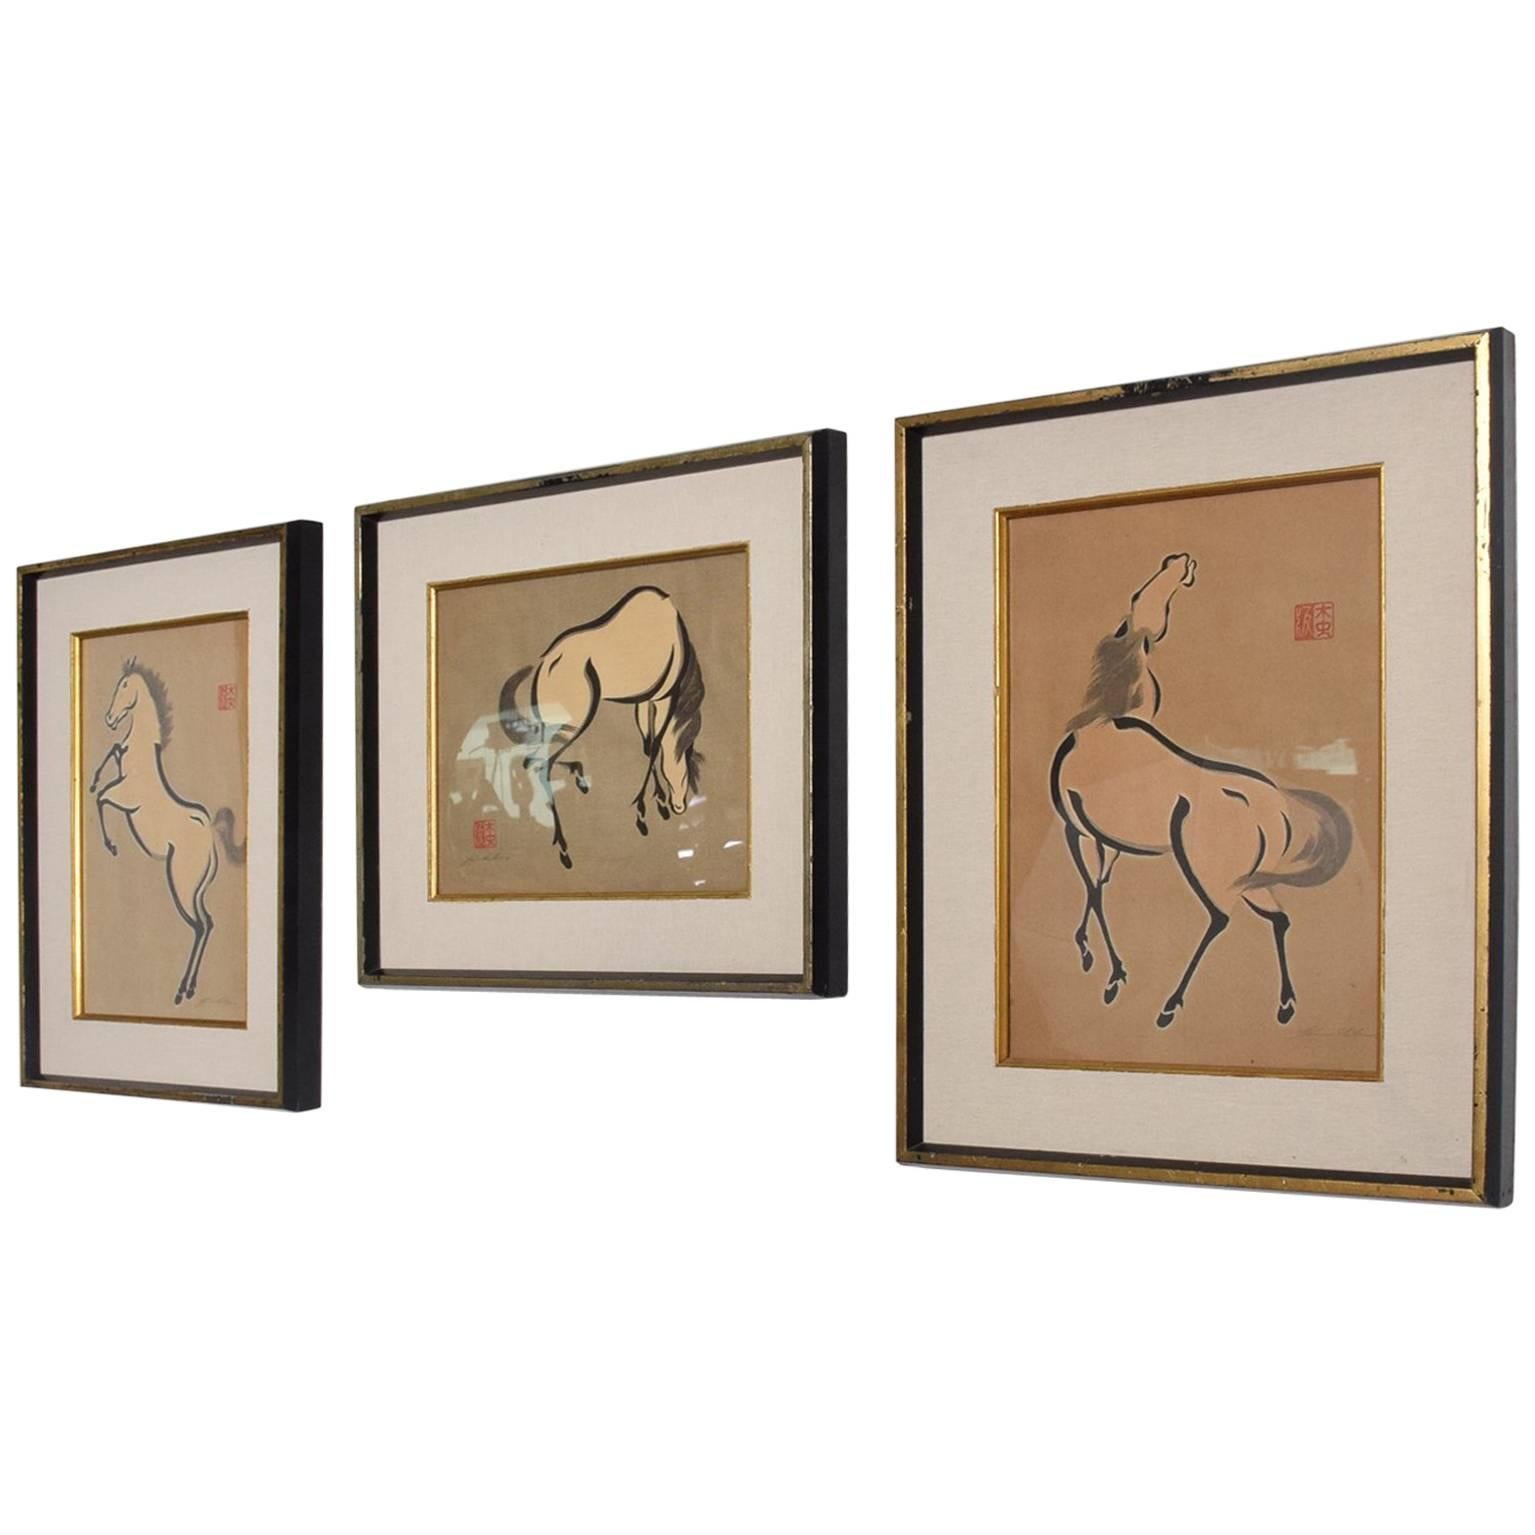 Set of Three Wood Block Japanese Horse Prints Urushibara Mokuchu